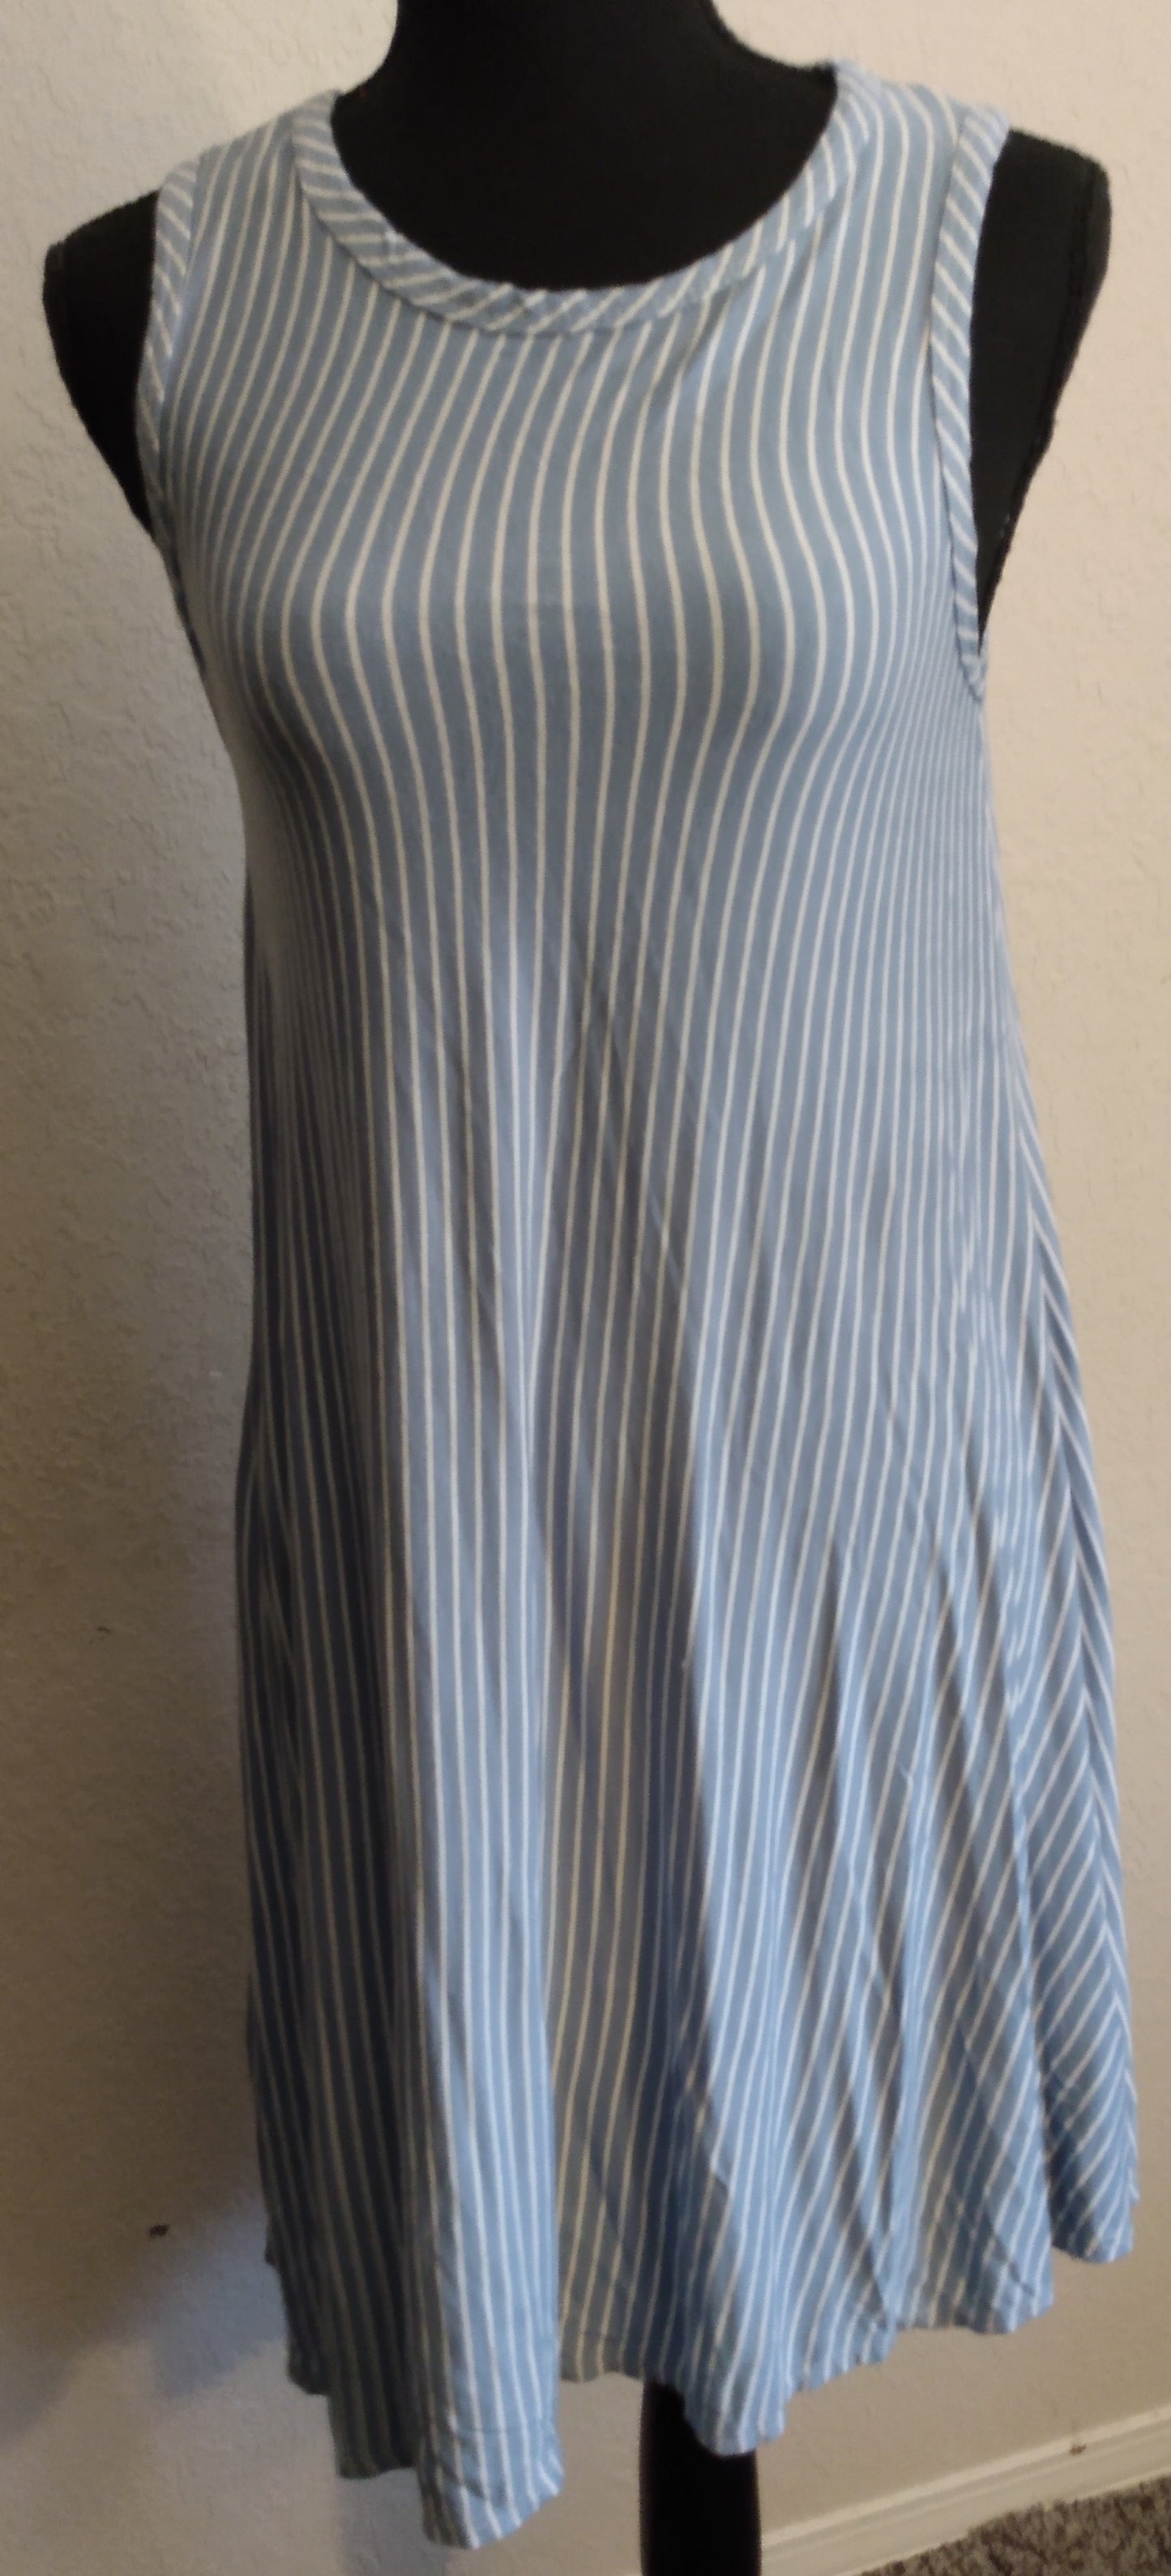 Sleeveless Sky Blue and White Striped Dress